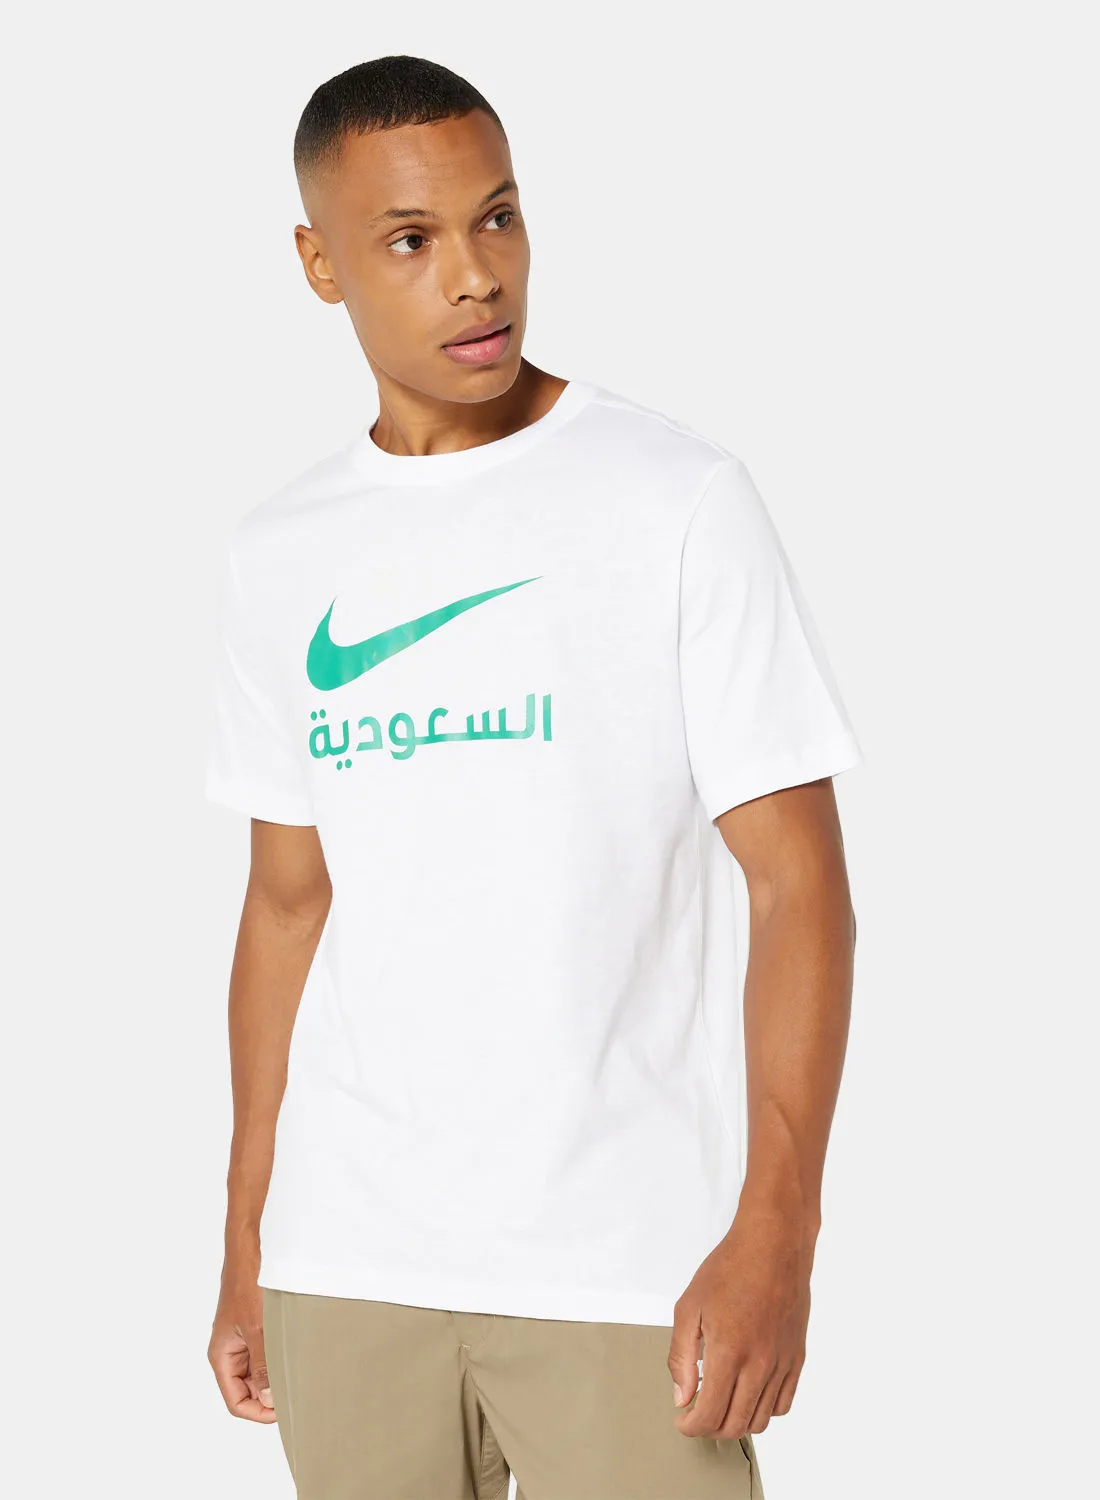 Nike Saudi Arabia Swoosh T-Shirt (Arabic)